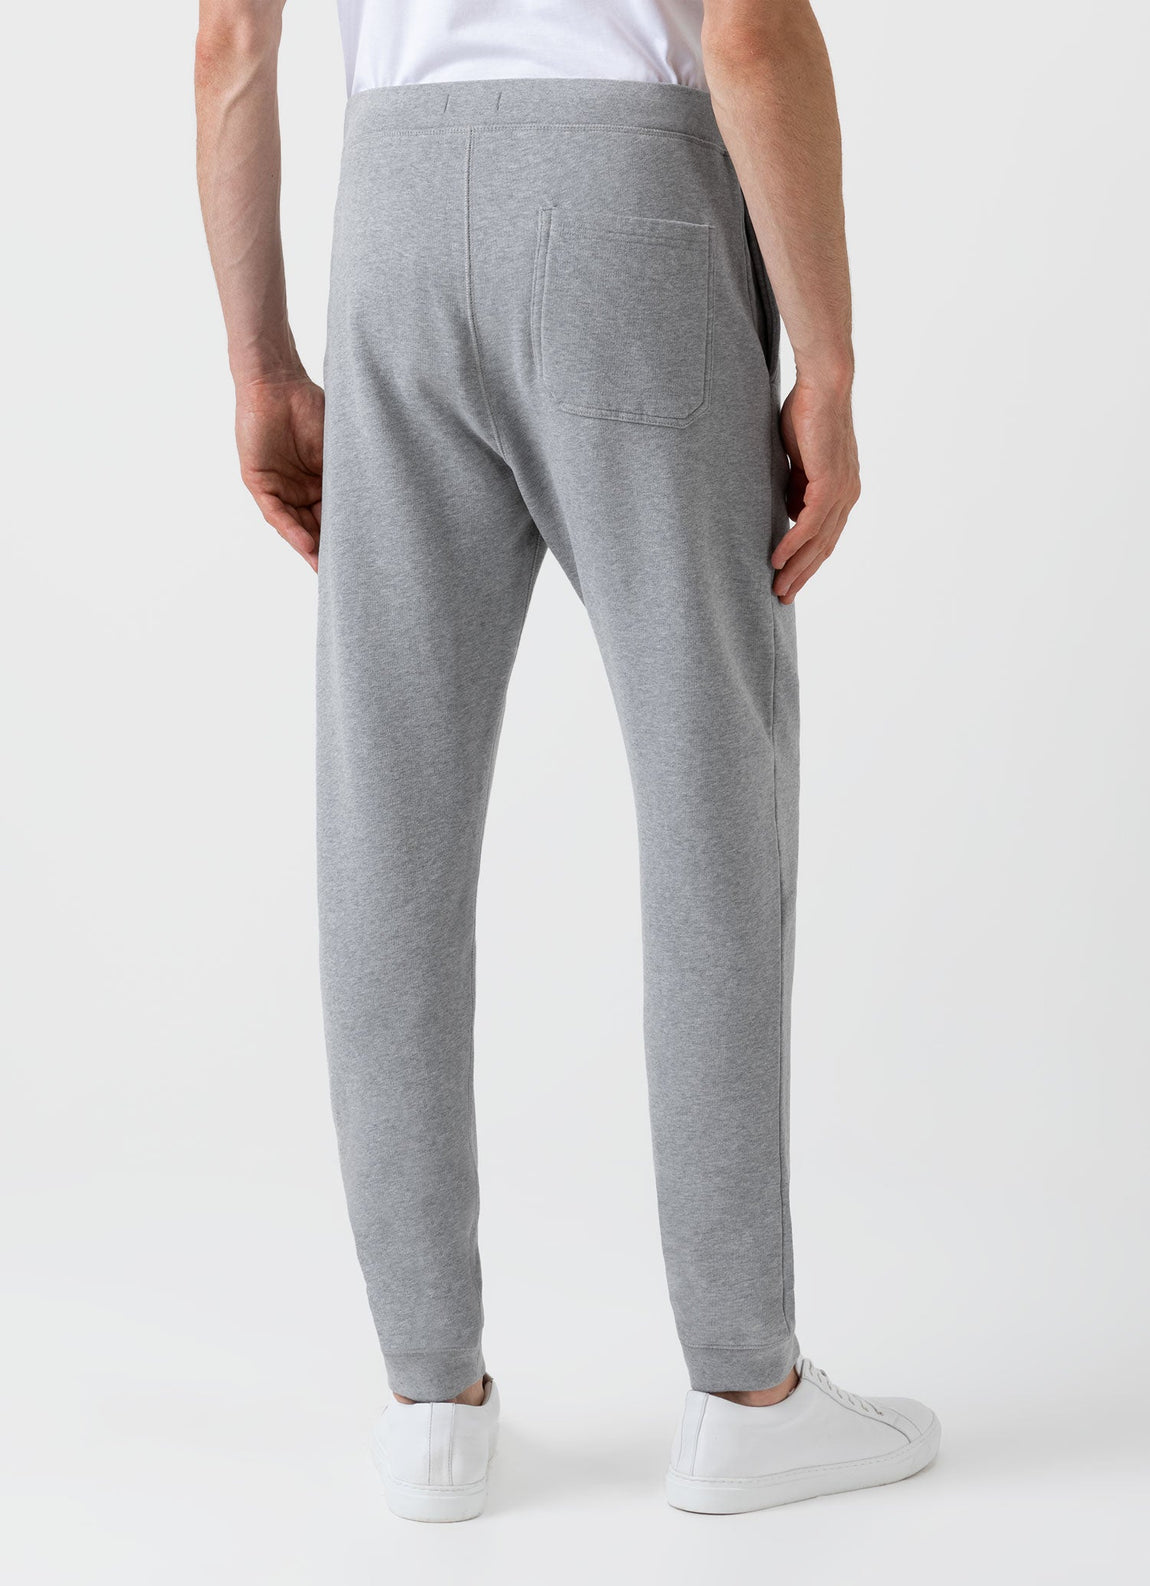 Grey Cotton Sweatpants Cuffed Sweatpants Women's Joggers Sustainable Joggers  